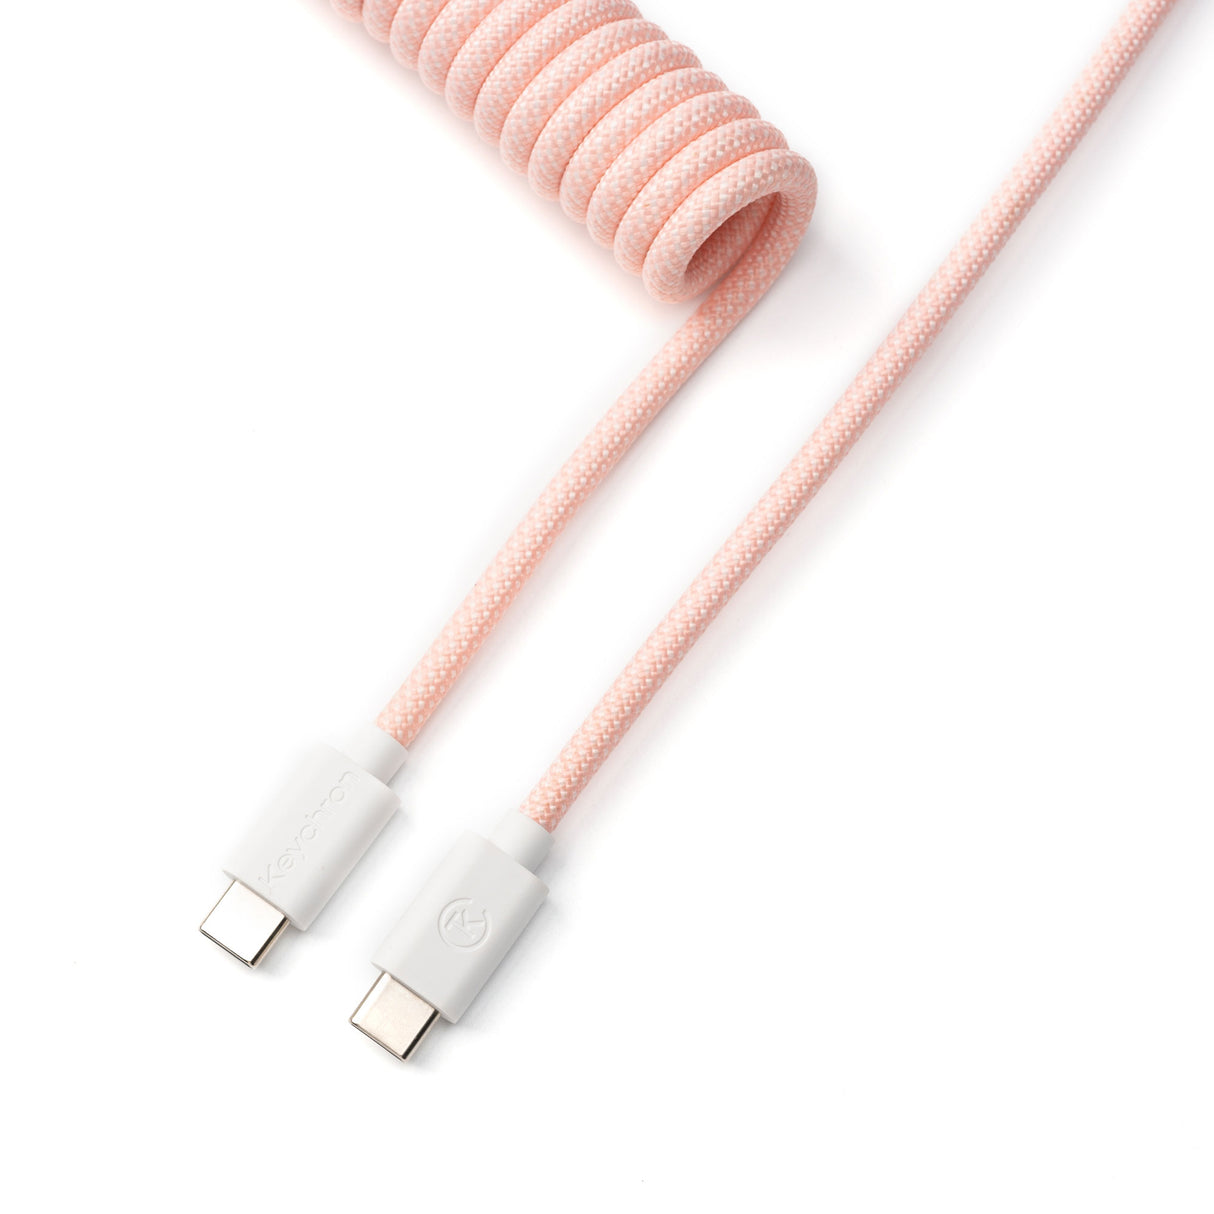 Custom Non-Detachable USB Keyboard Cable